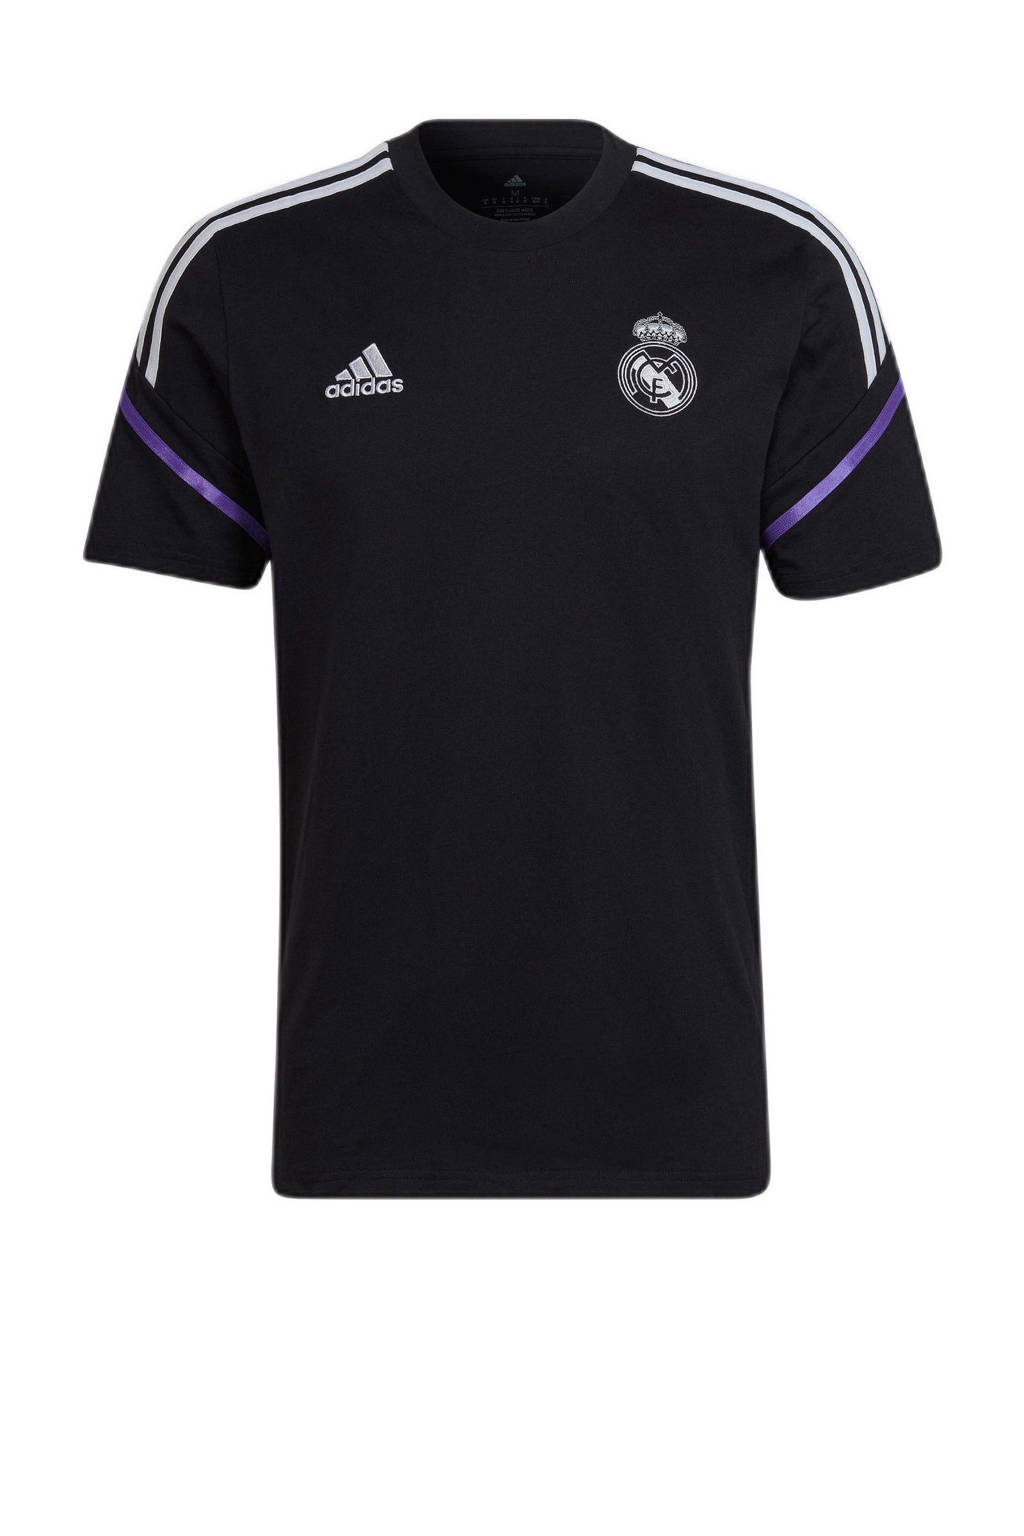 adidas Performance Senior Real Madrid voetbalshirt training zwart/wit/paars